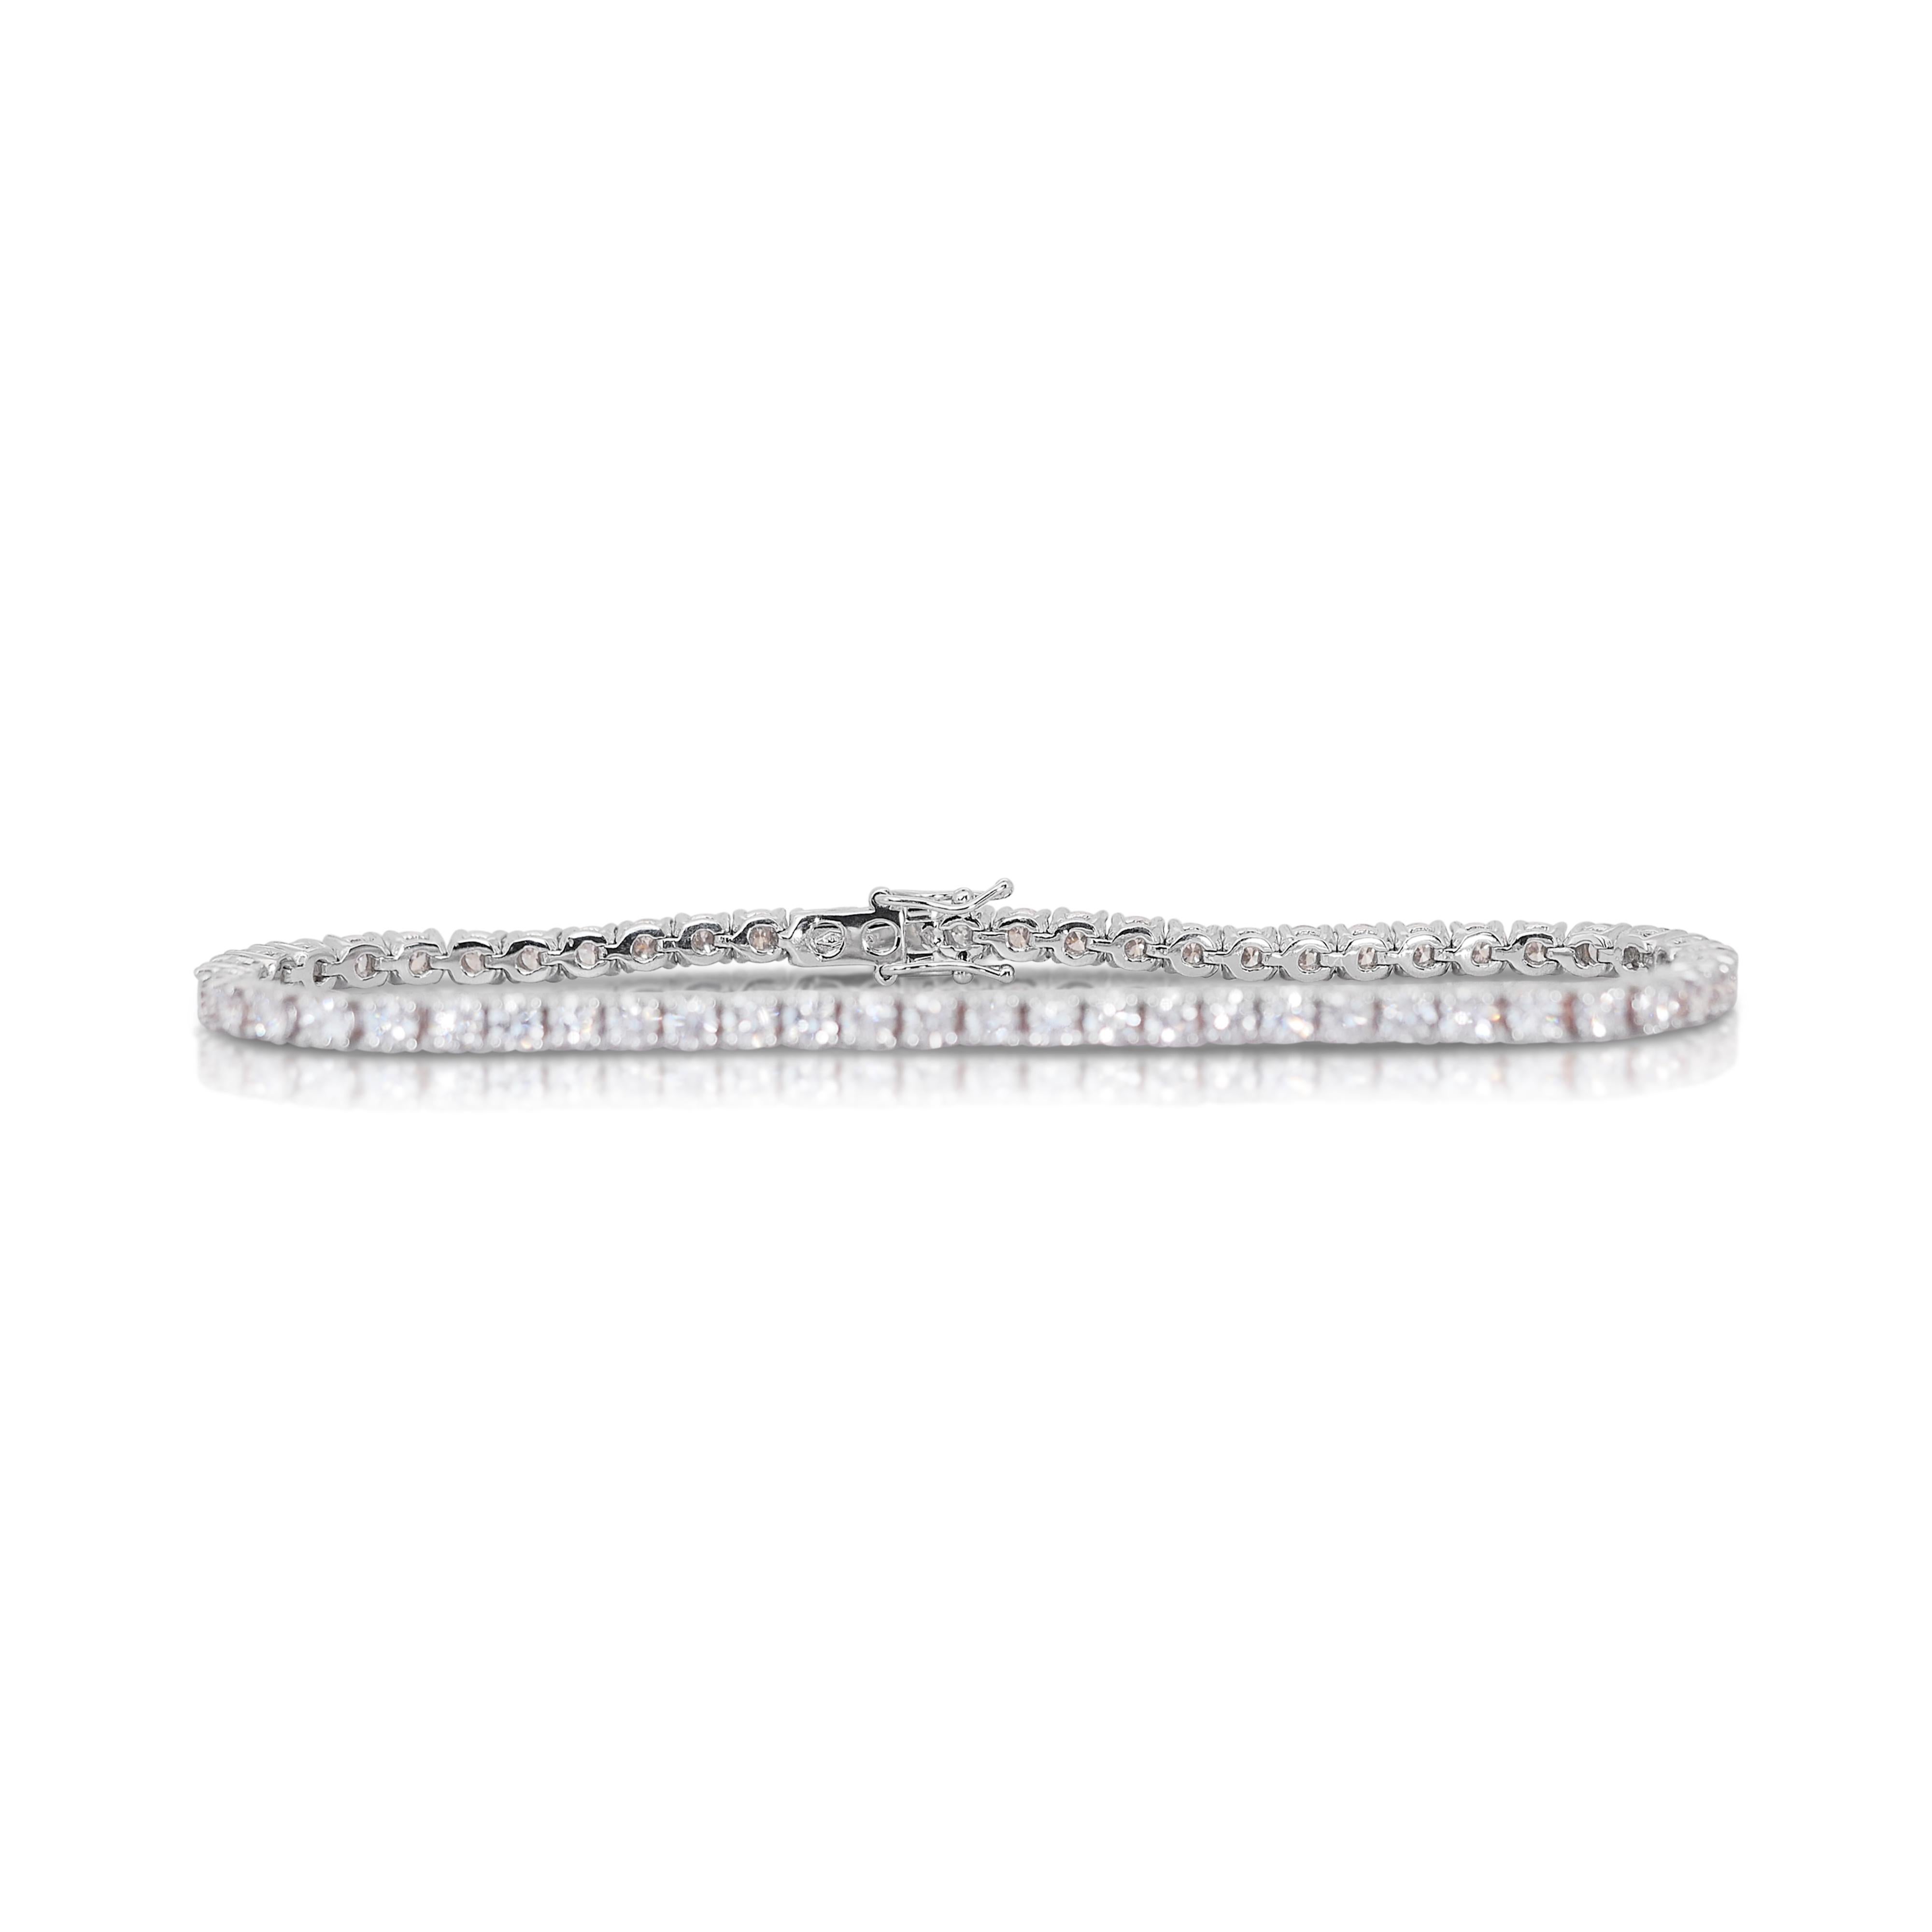 Round Cut Radiant 5.32ct Diamonds Tennis Bracelet in 14k White Gold - IGI Certified For Sale